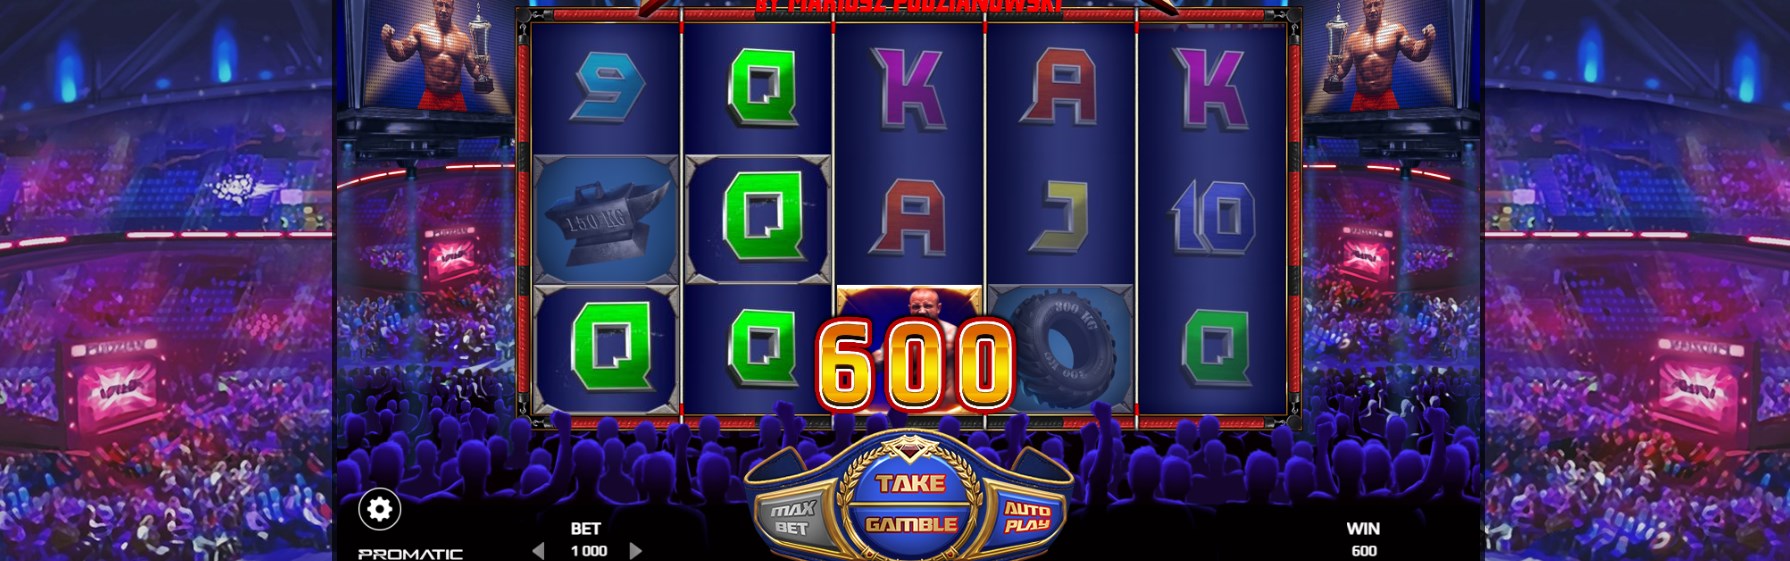 My Jackpot Casino Poland Slot Games